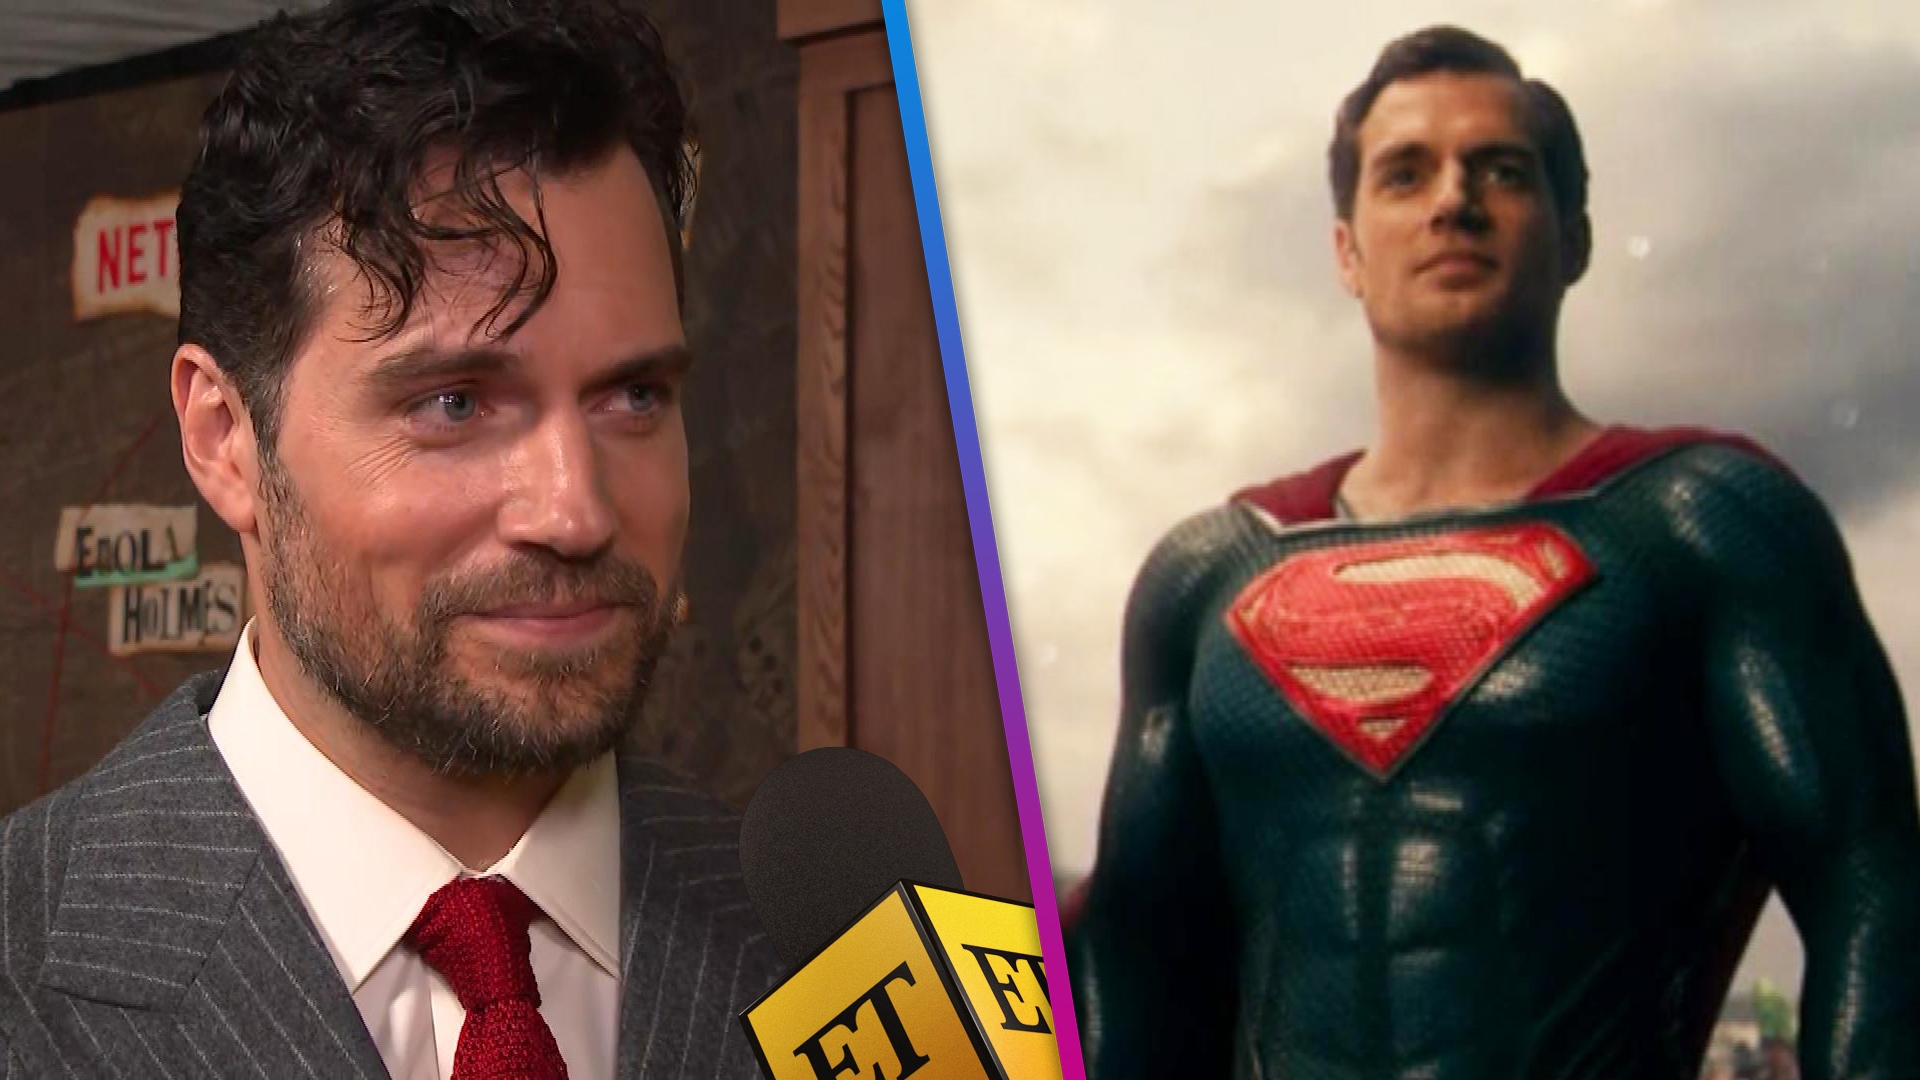 Superman star Henry Cavill will play Sherlock Holmes in new movie